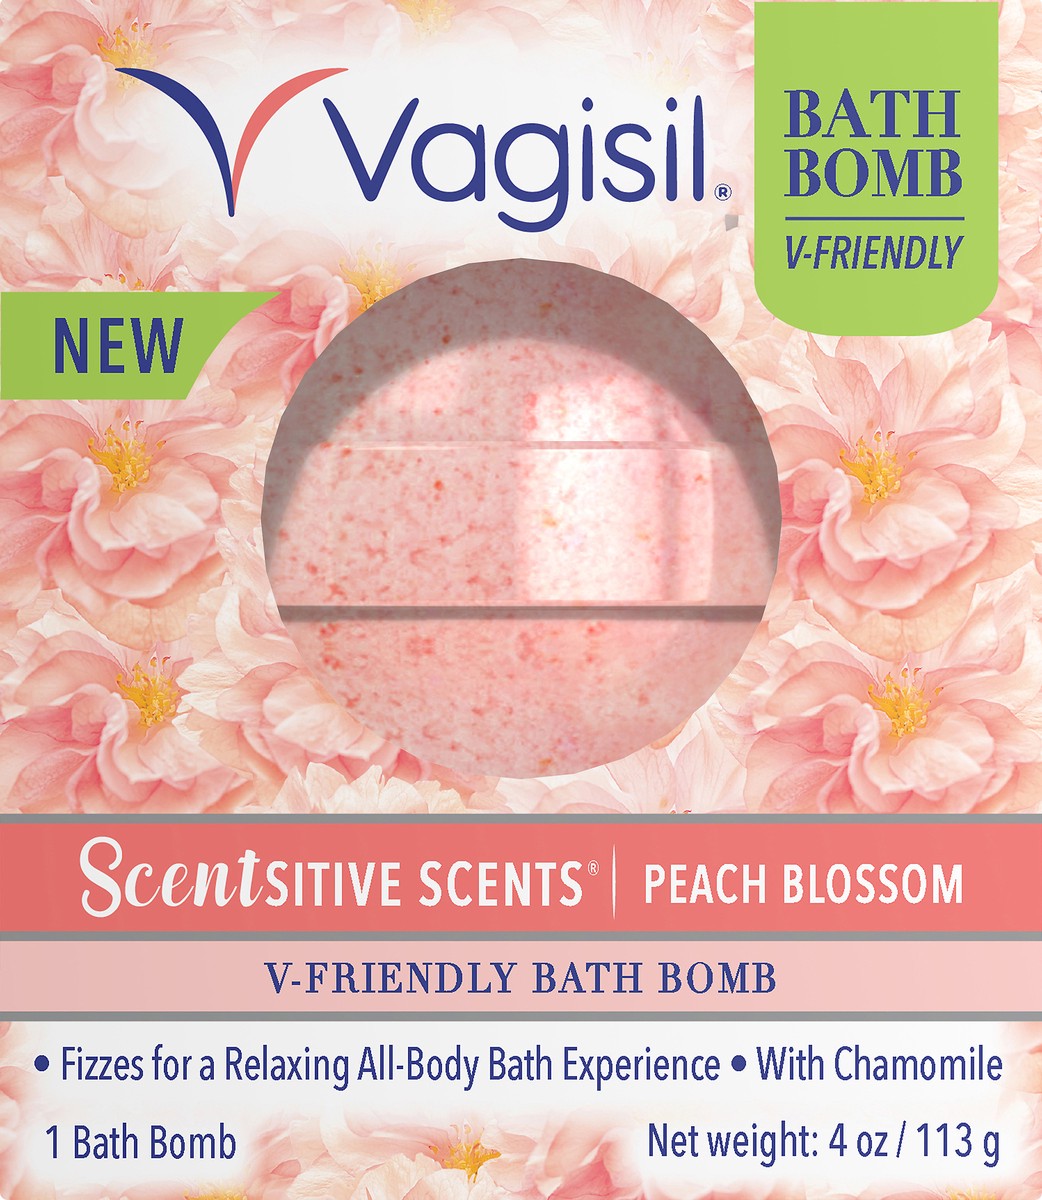 slide 6 of 7, Vagisil Scentsitive Scents V-Friendly Bath Bomb, pH-Friendly for Sensitive Vaginal Skin, Peach Blossom, 4 oz